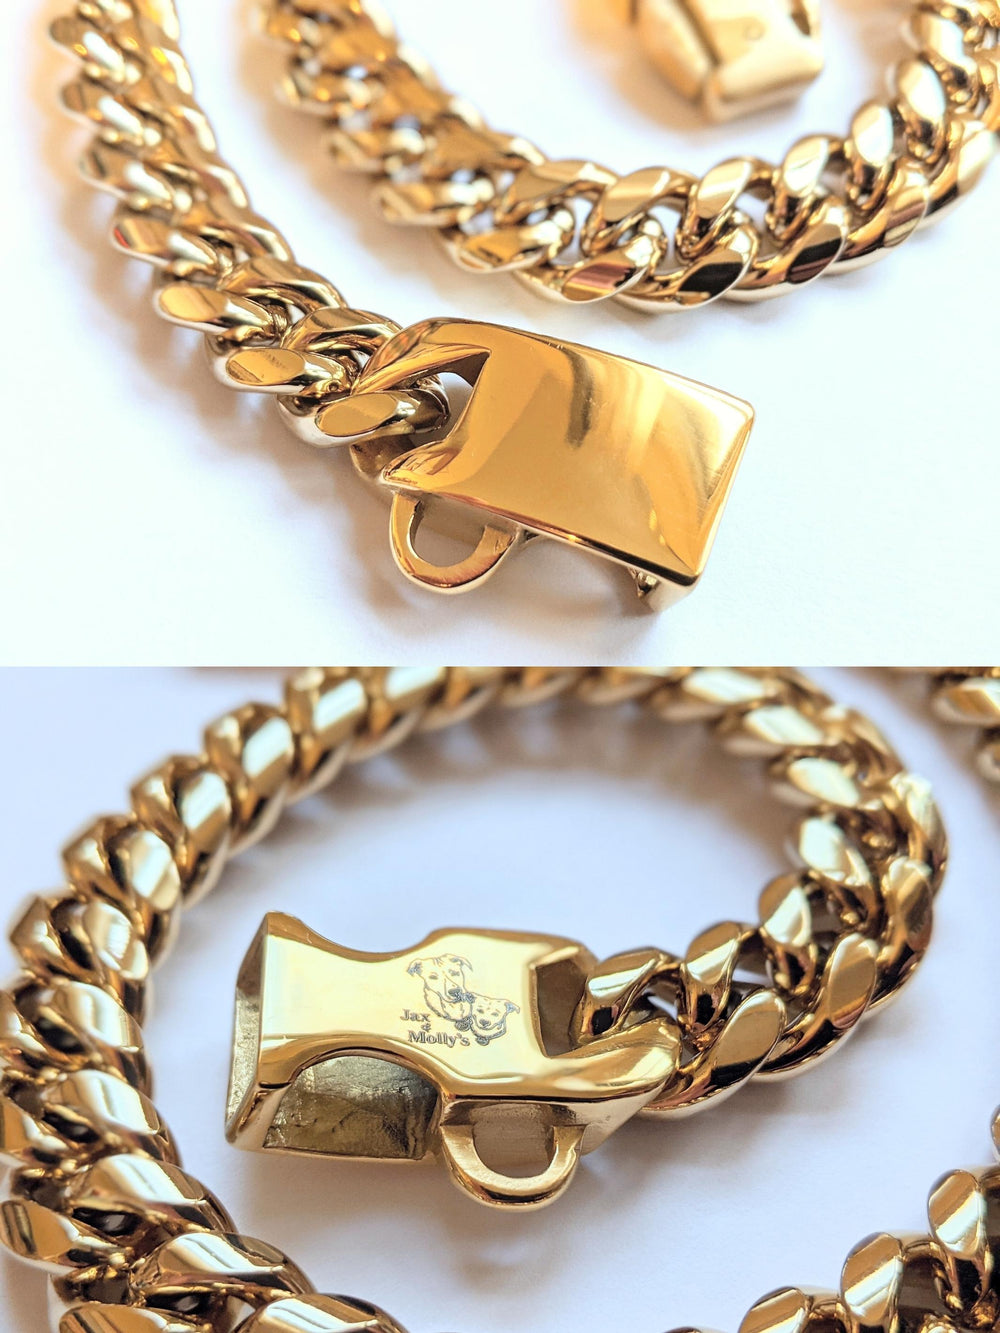 Jax & Molly's Gold Cuban Link Dog Chain - 14mm /18"